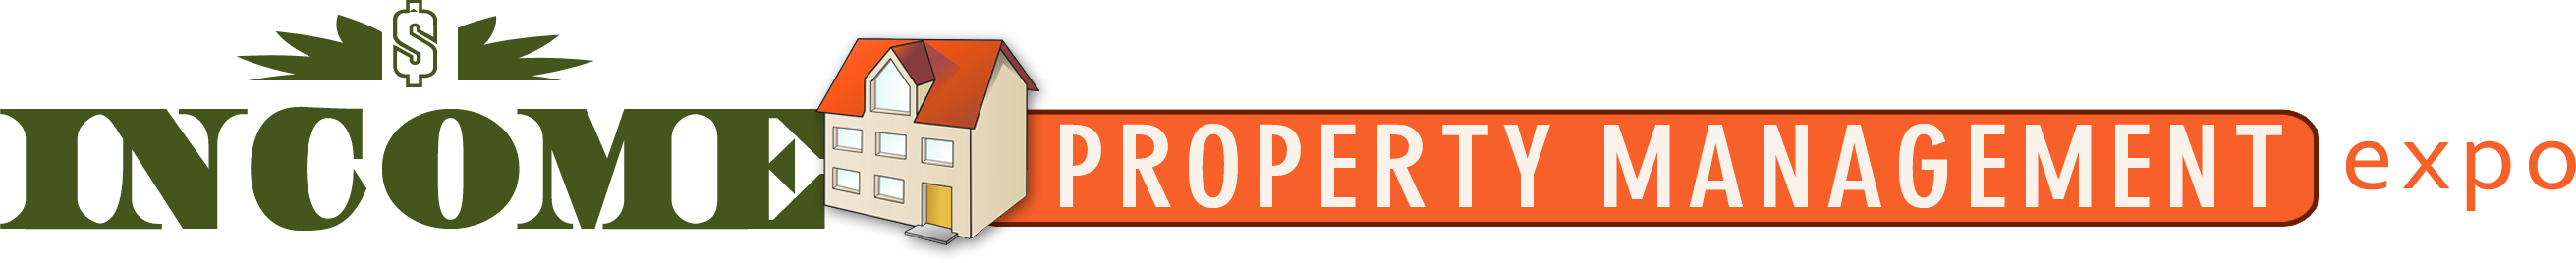 IncomeProperty_Horizontal2_Logo